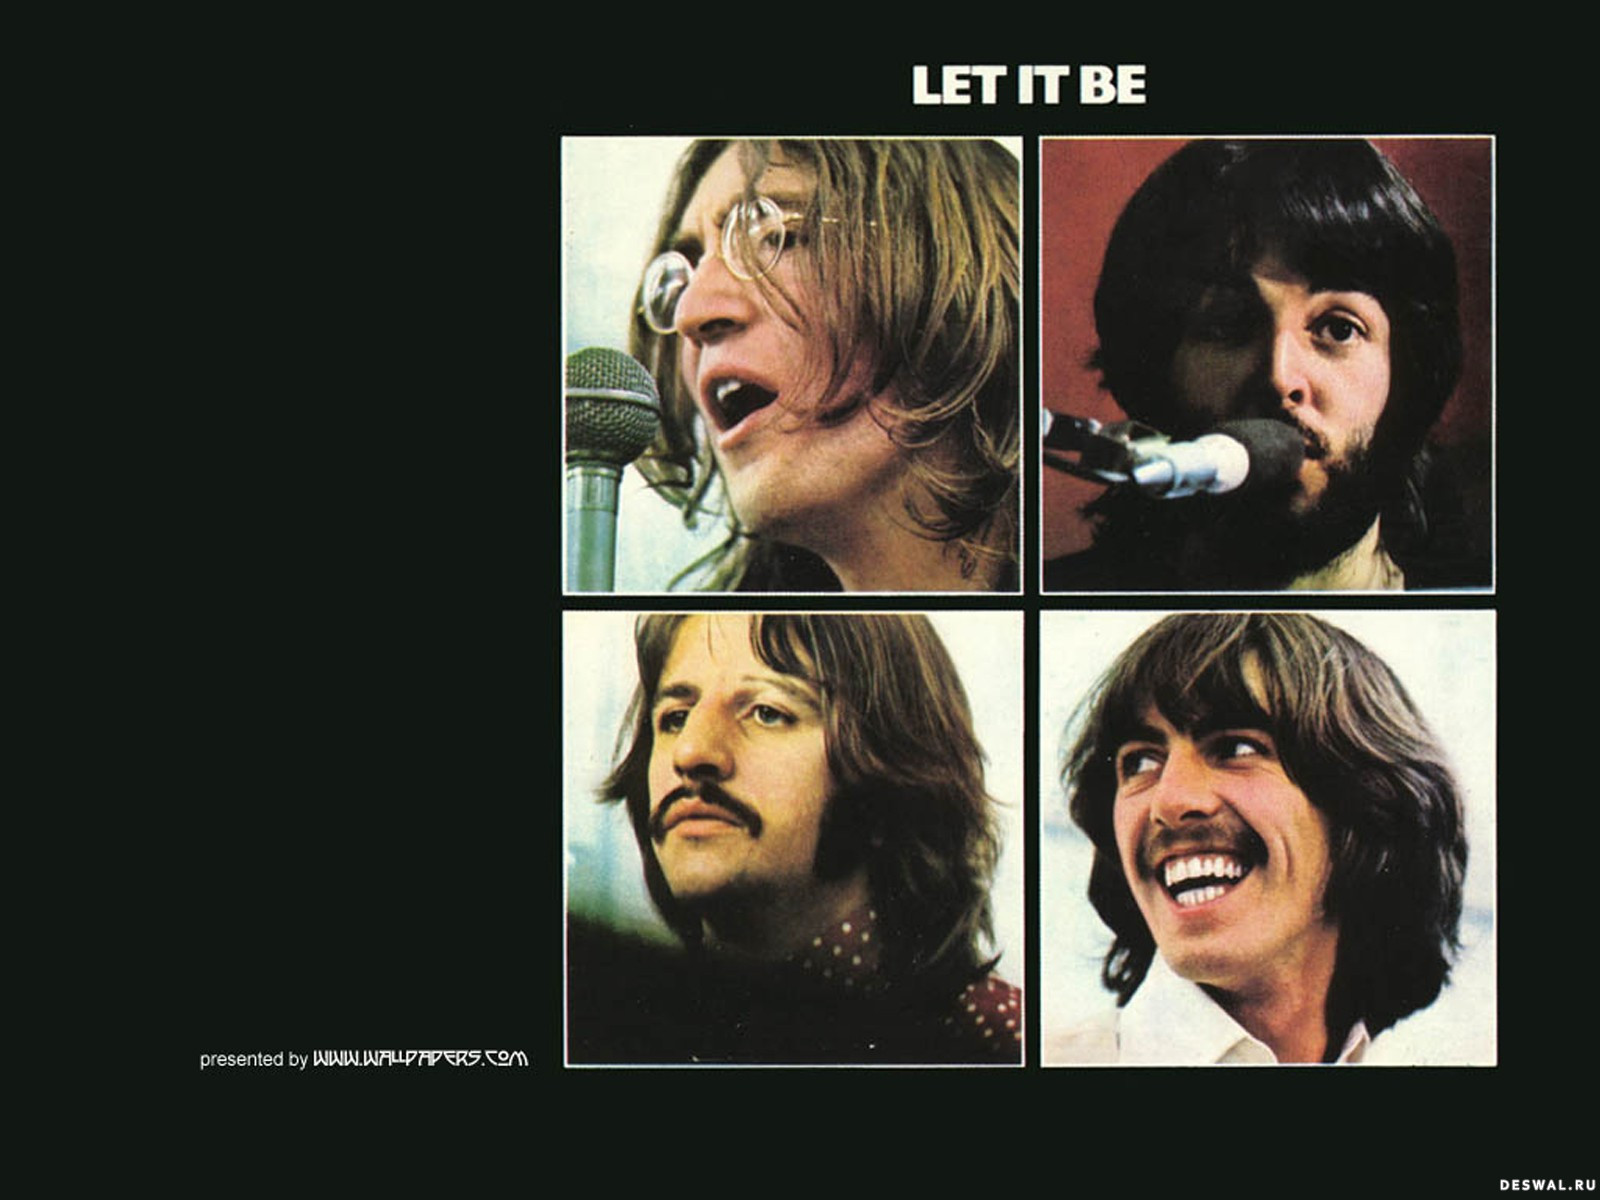 Лет ит би слушать. Let it be album. The Beatles - Let it be. The Beatles Let it be обложка альбома. Let it be the Beatles фото.